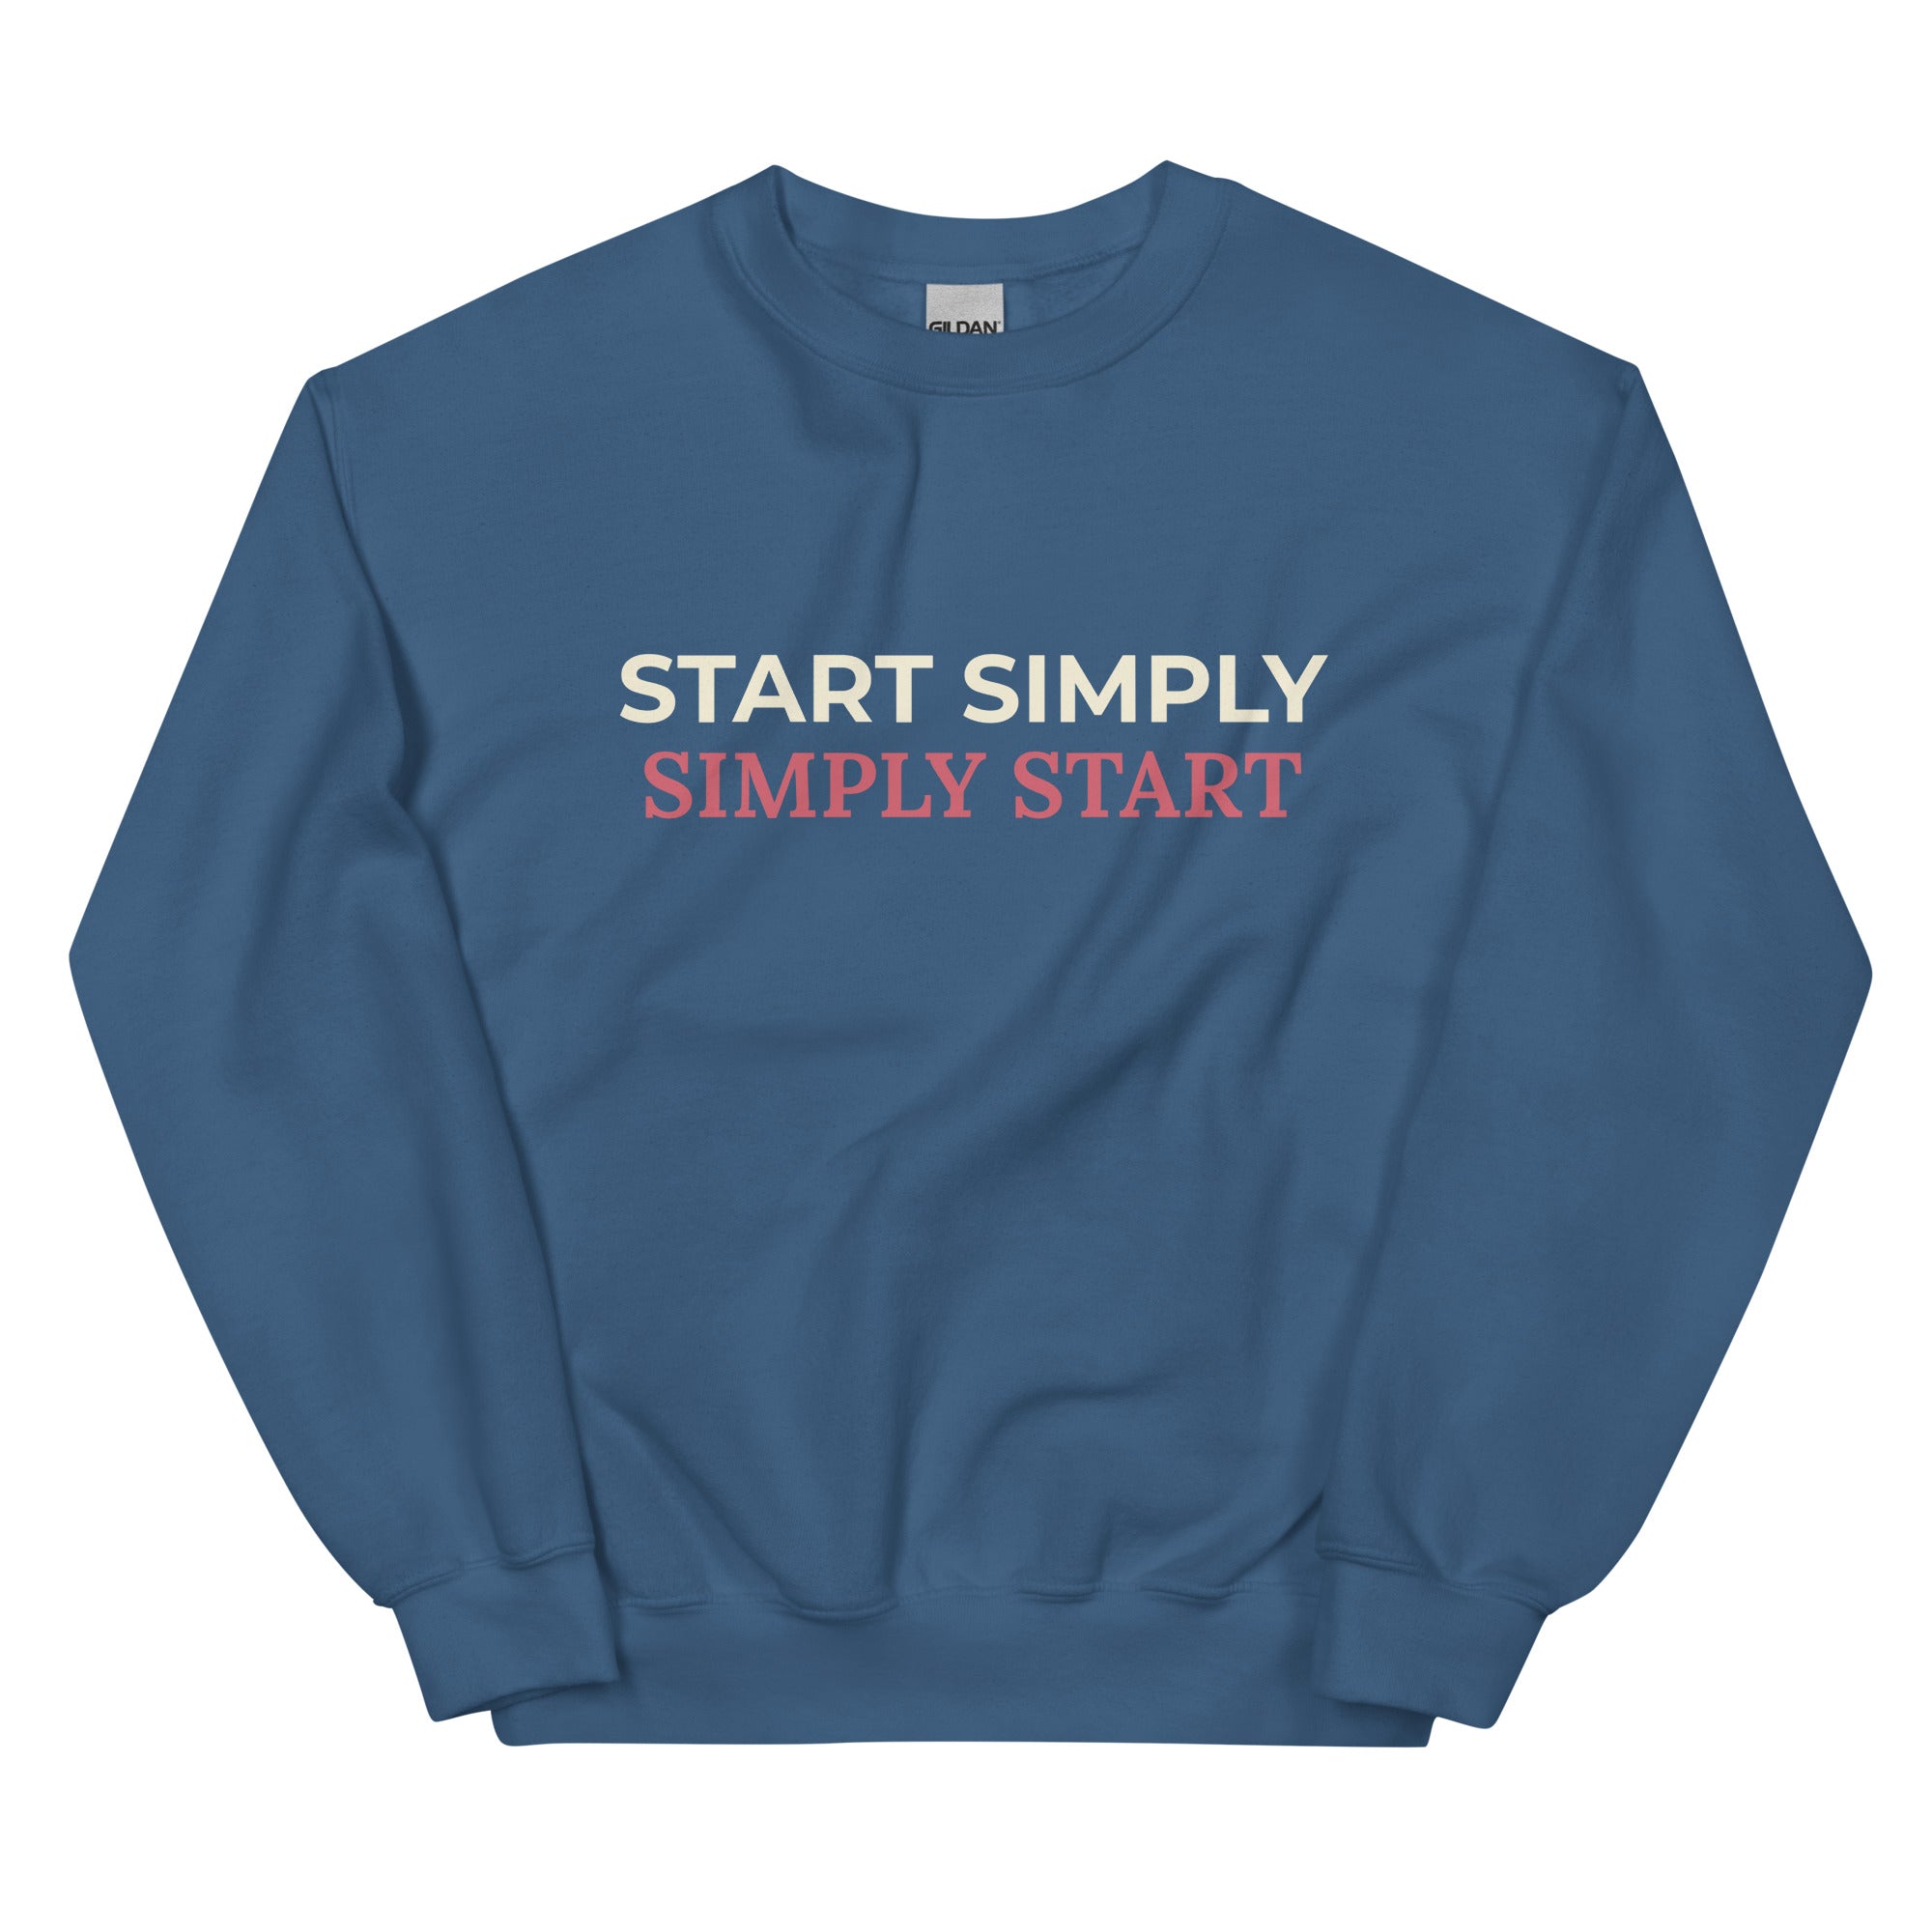 Start simply blue sweatshirt